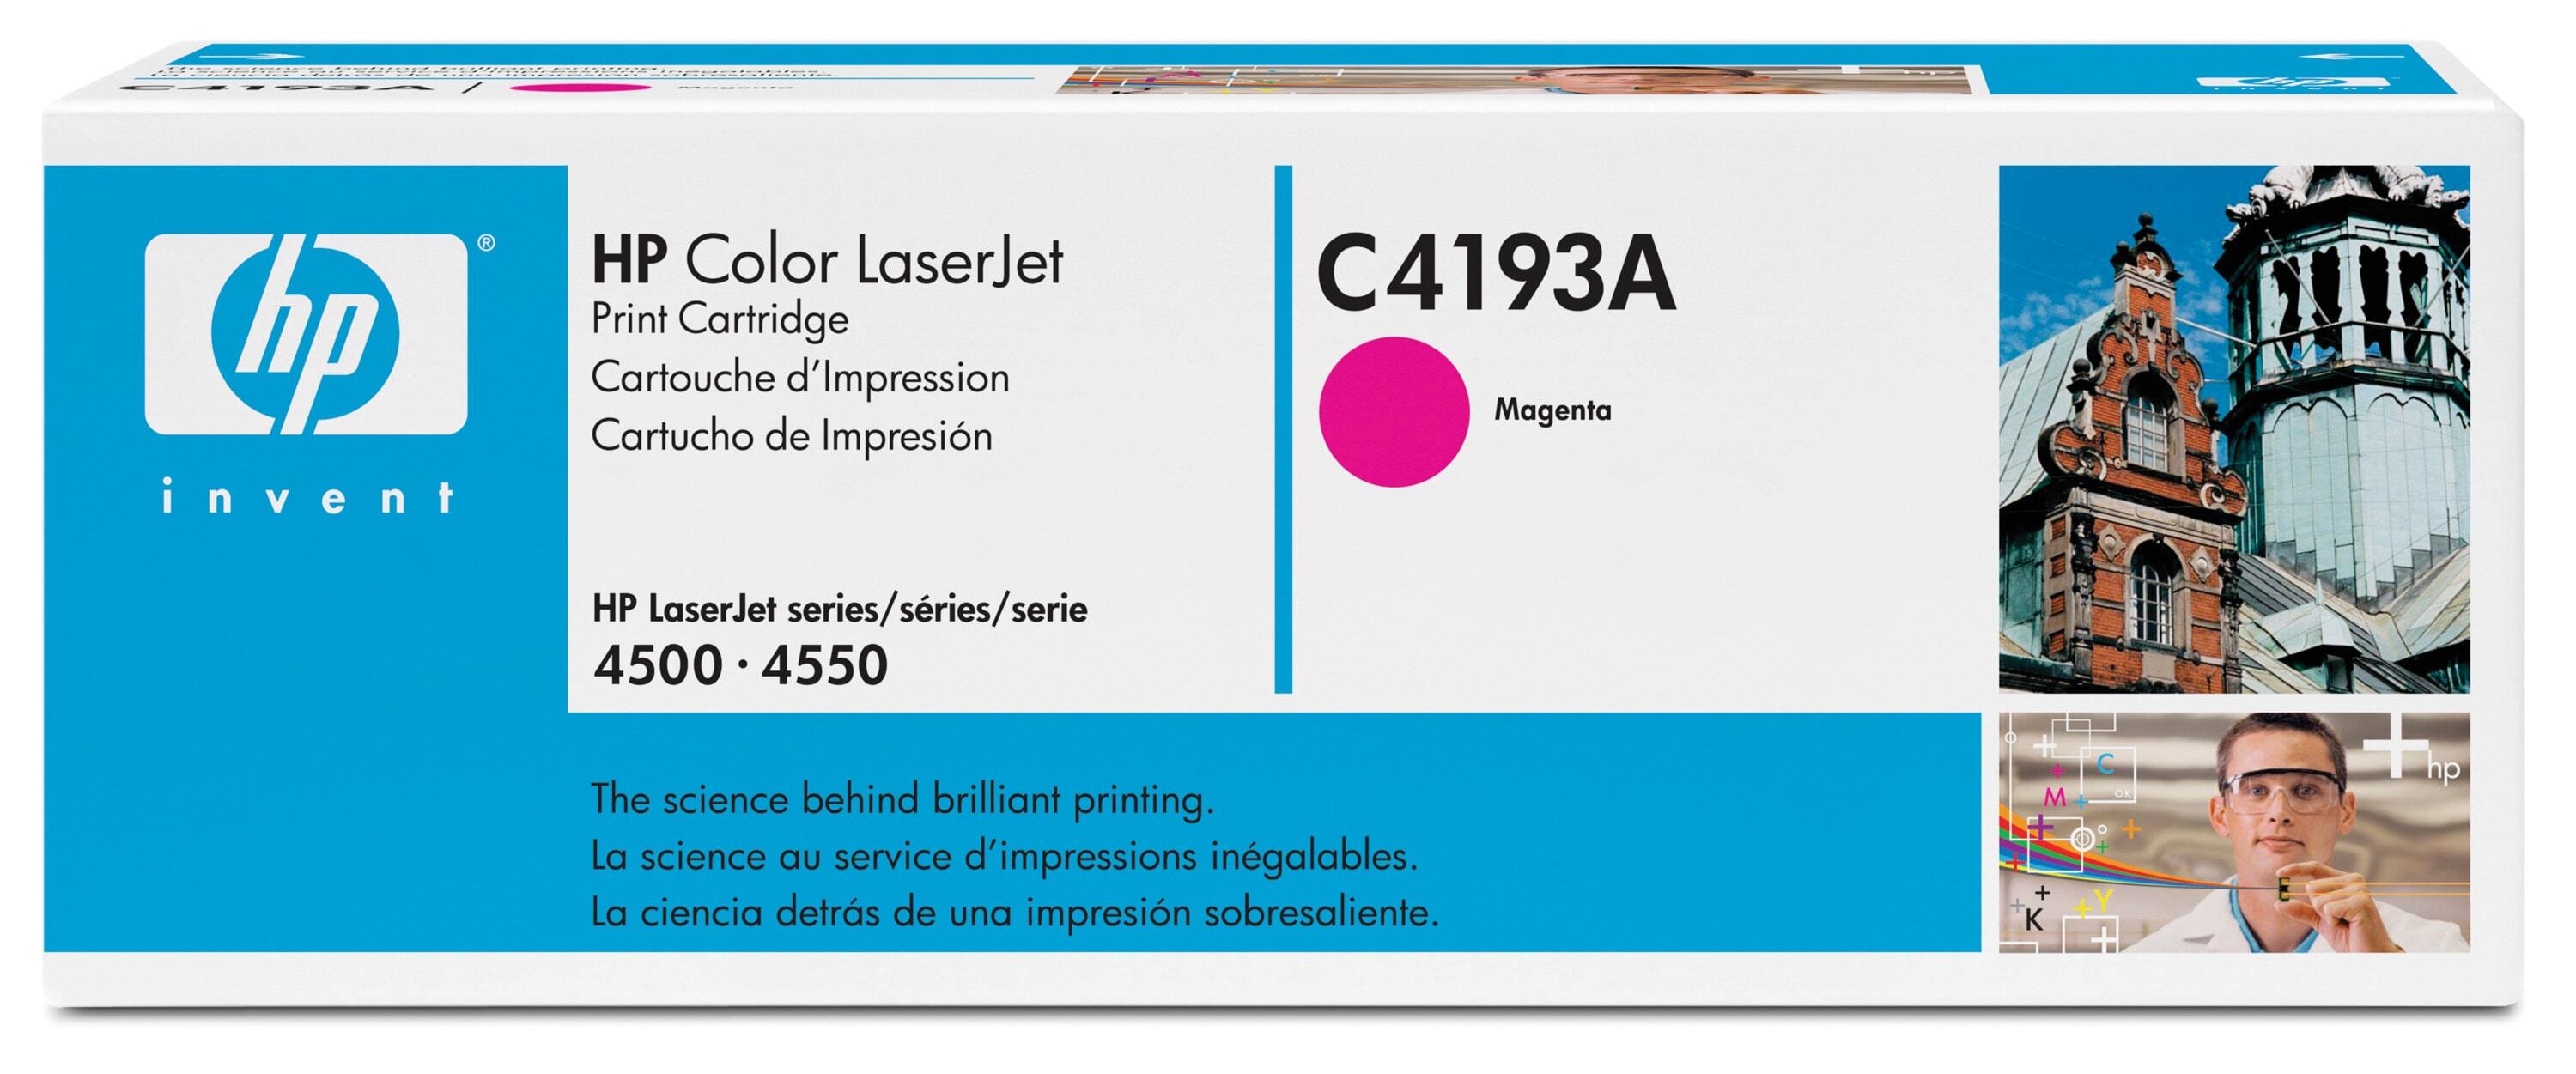 HP Color LaserJet C4193A Magenta Original Toner Cartridge